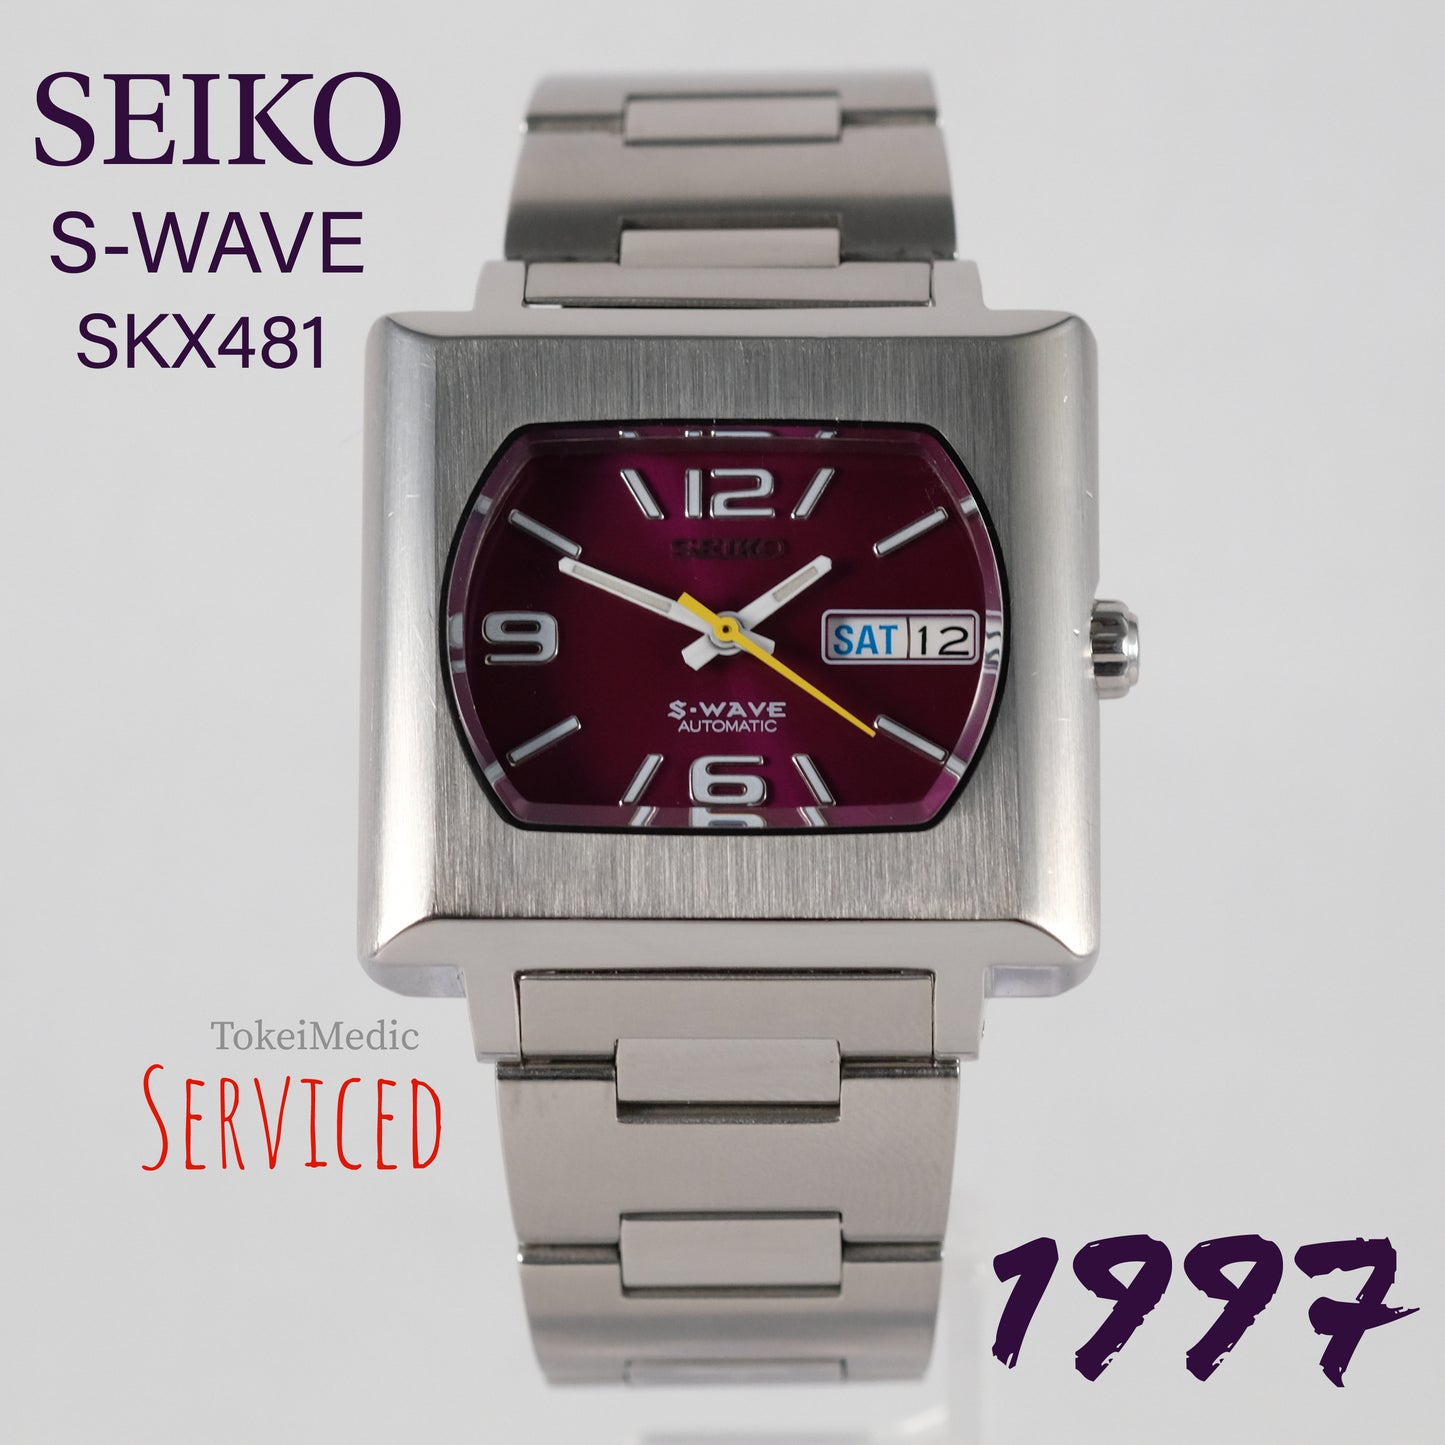 1997 Seiko S-Wave SKX481 7S26-5000